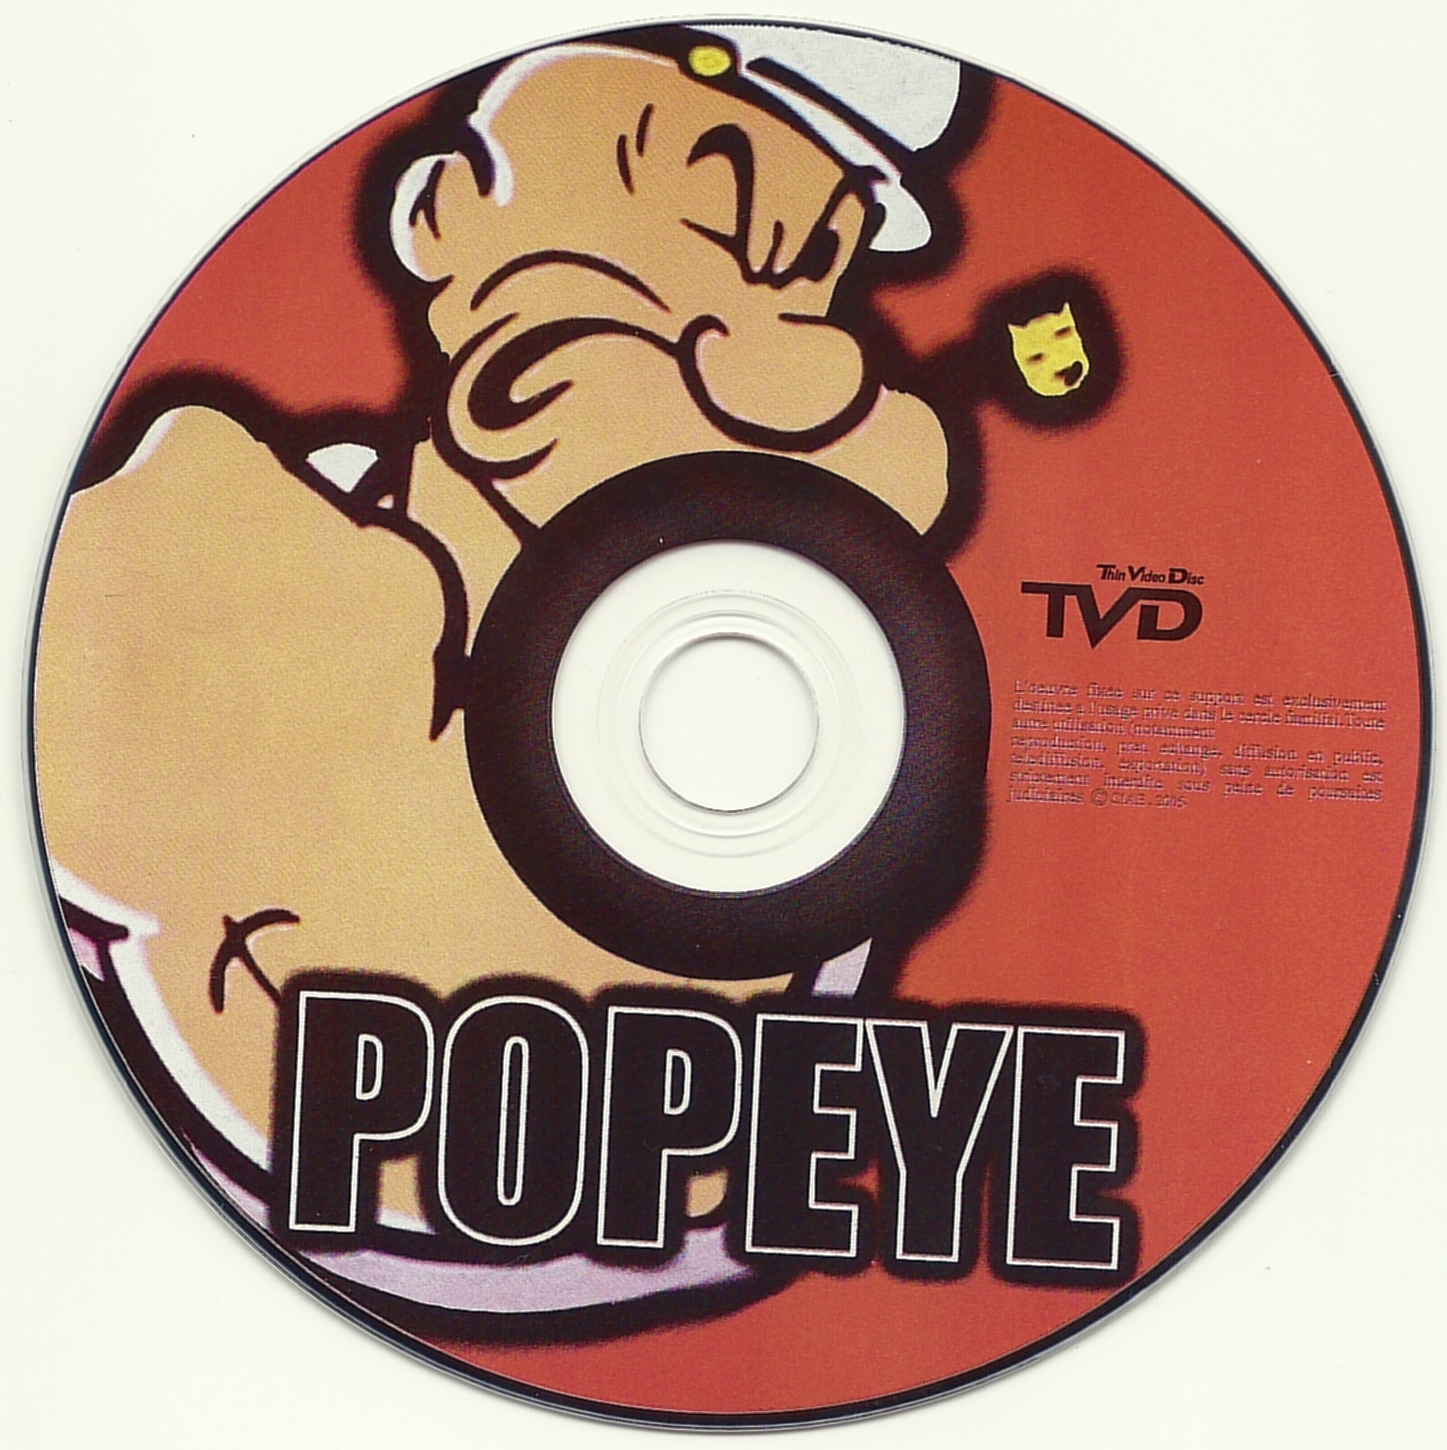 Popeye vol 1